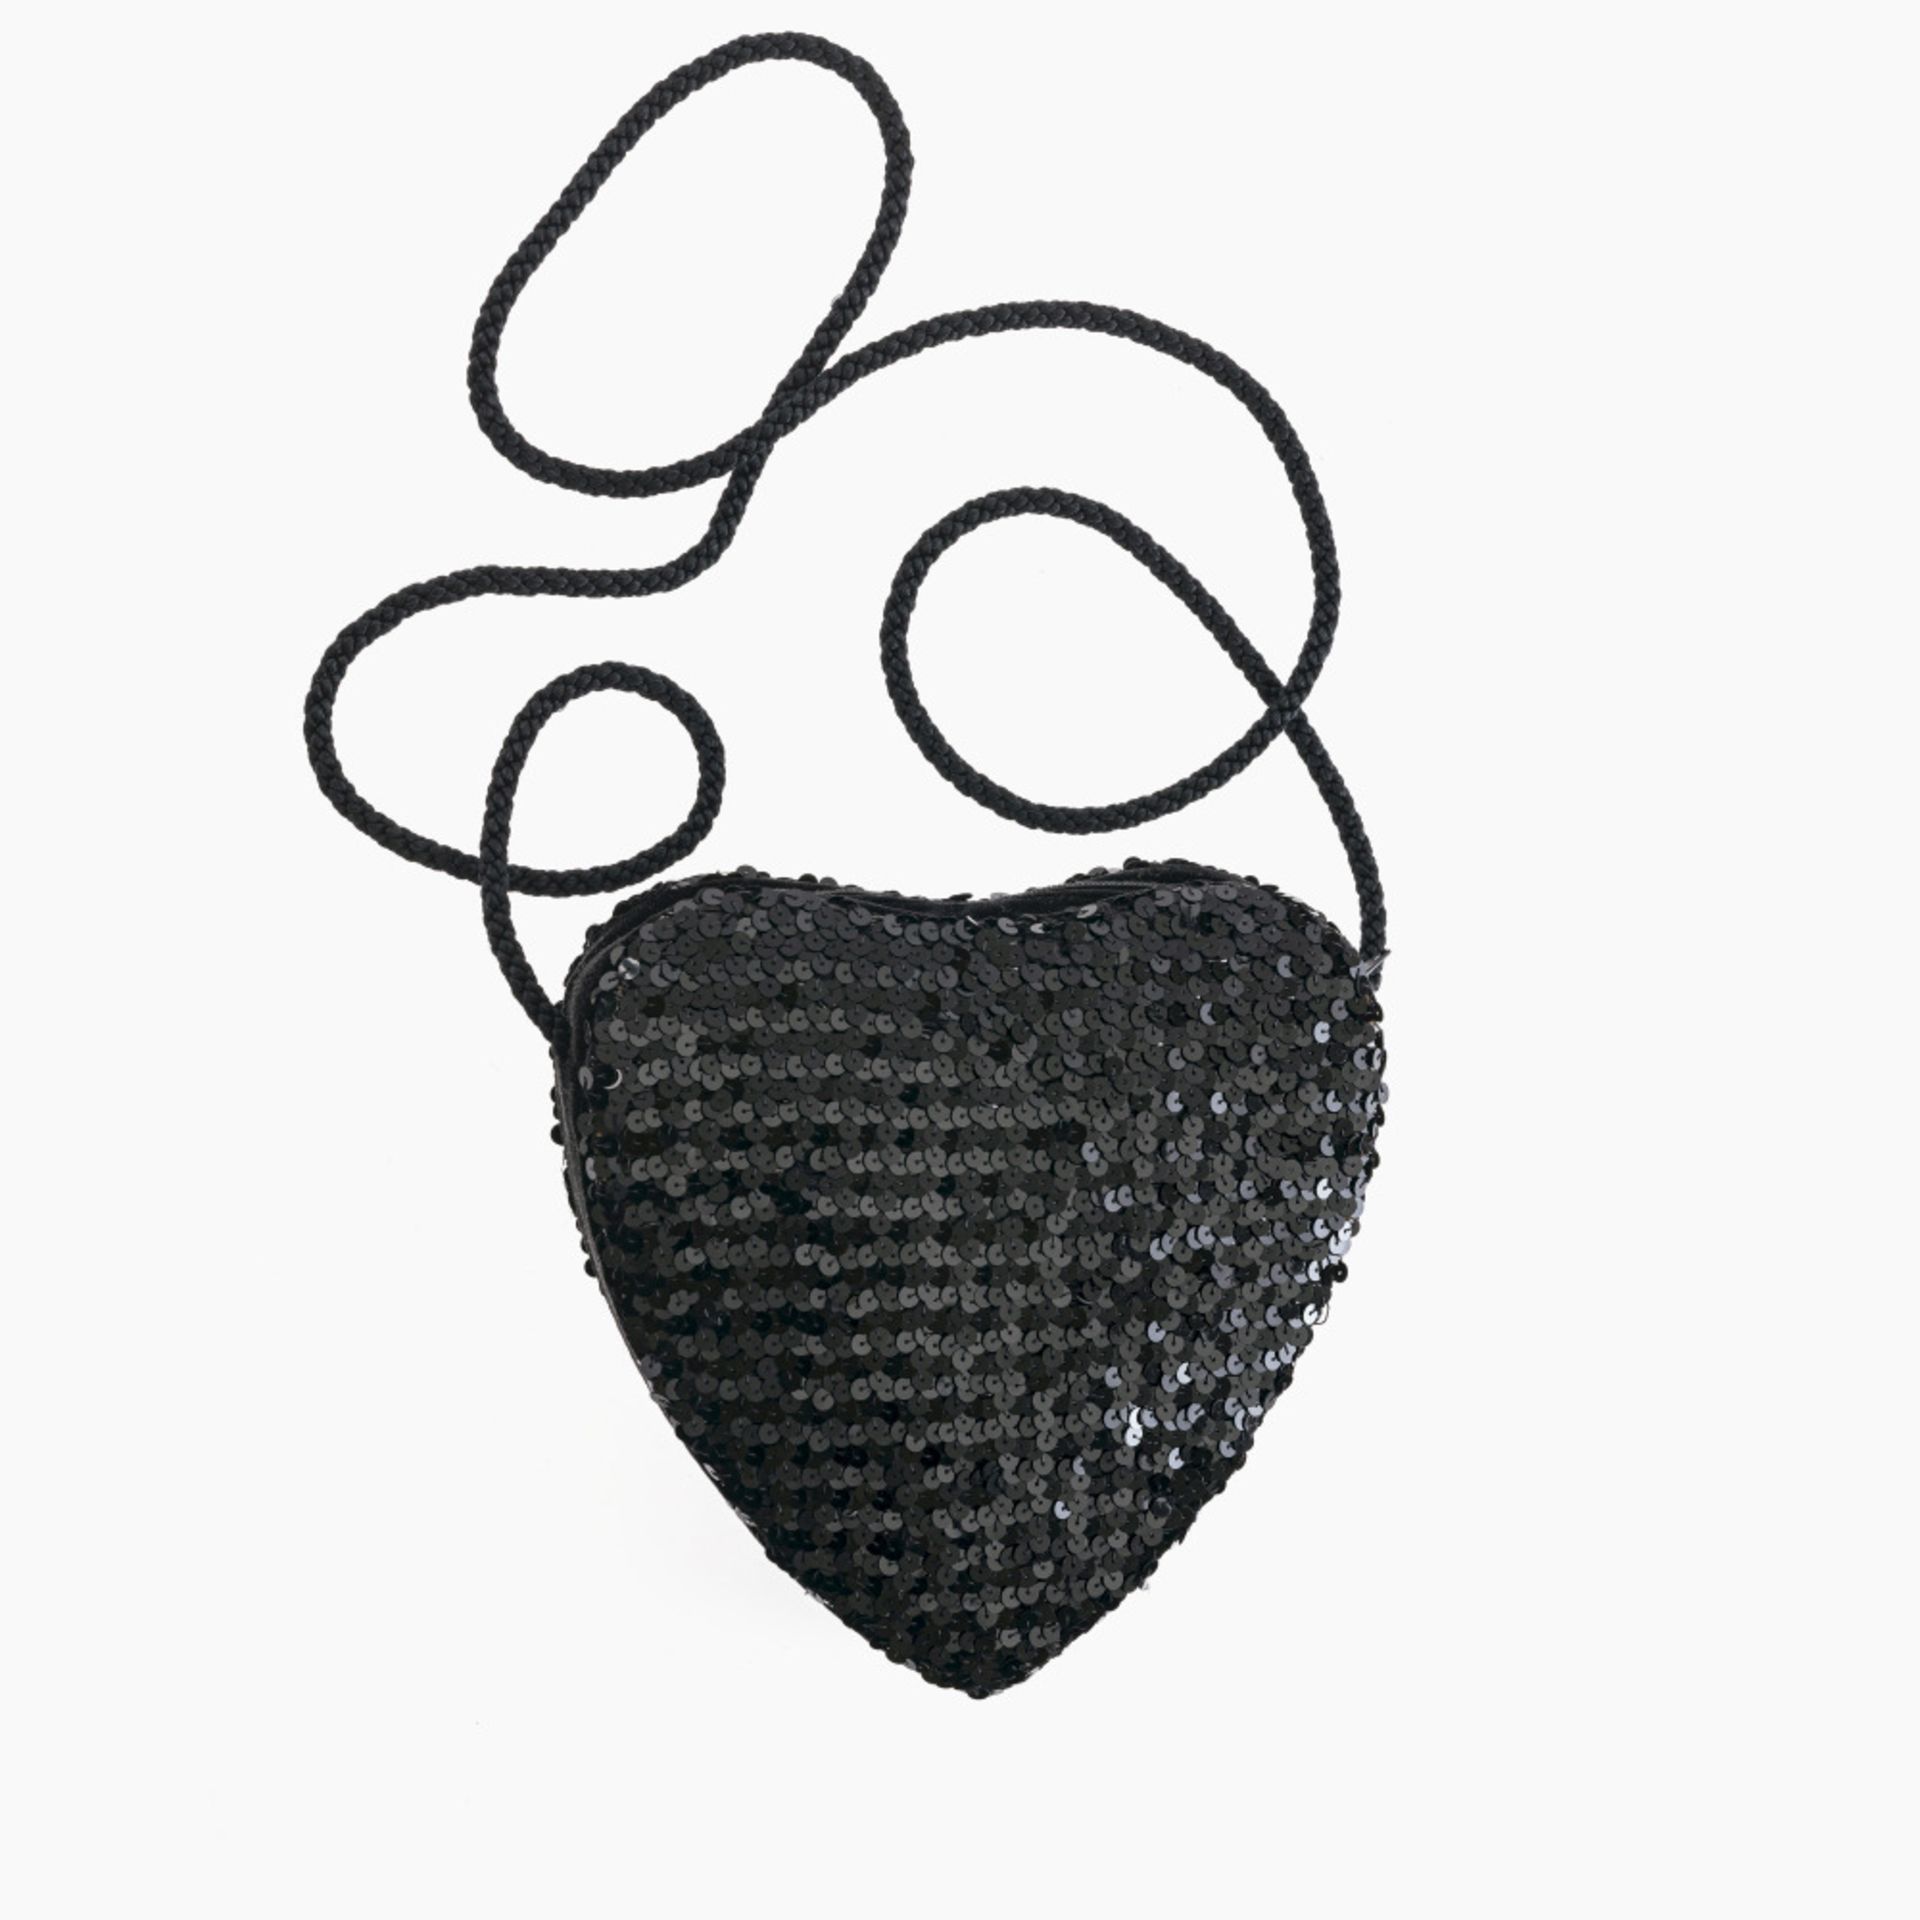 Herzförmige Abendtasche - Yves Saint Laurent, Rive Gauche, Paris